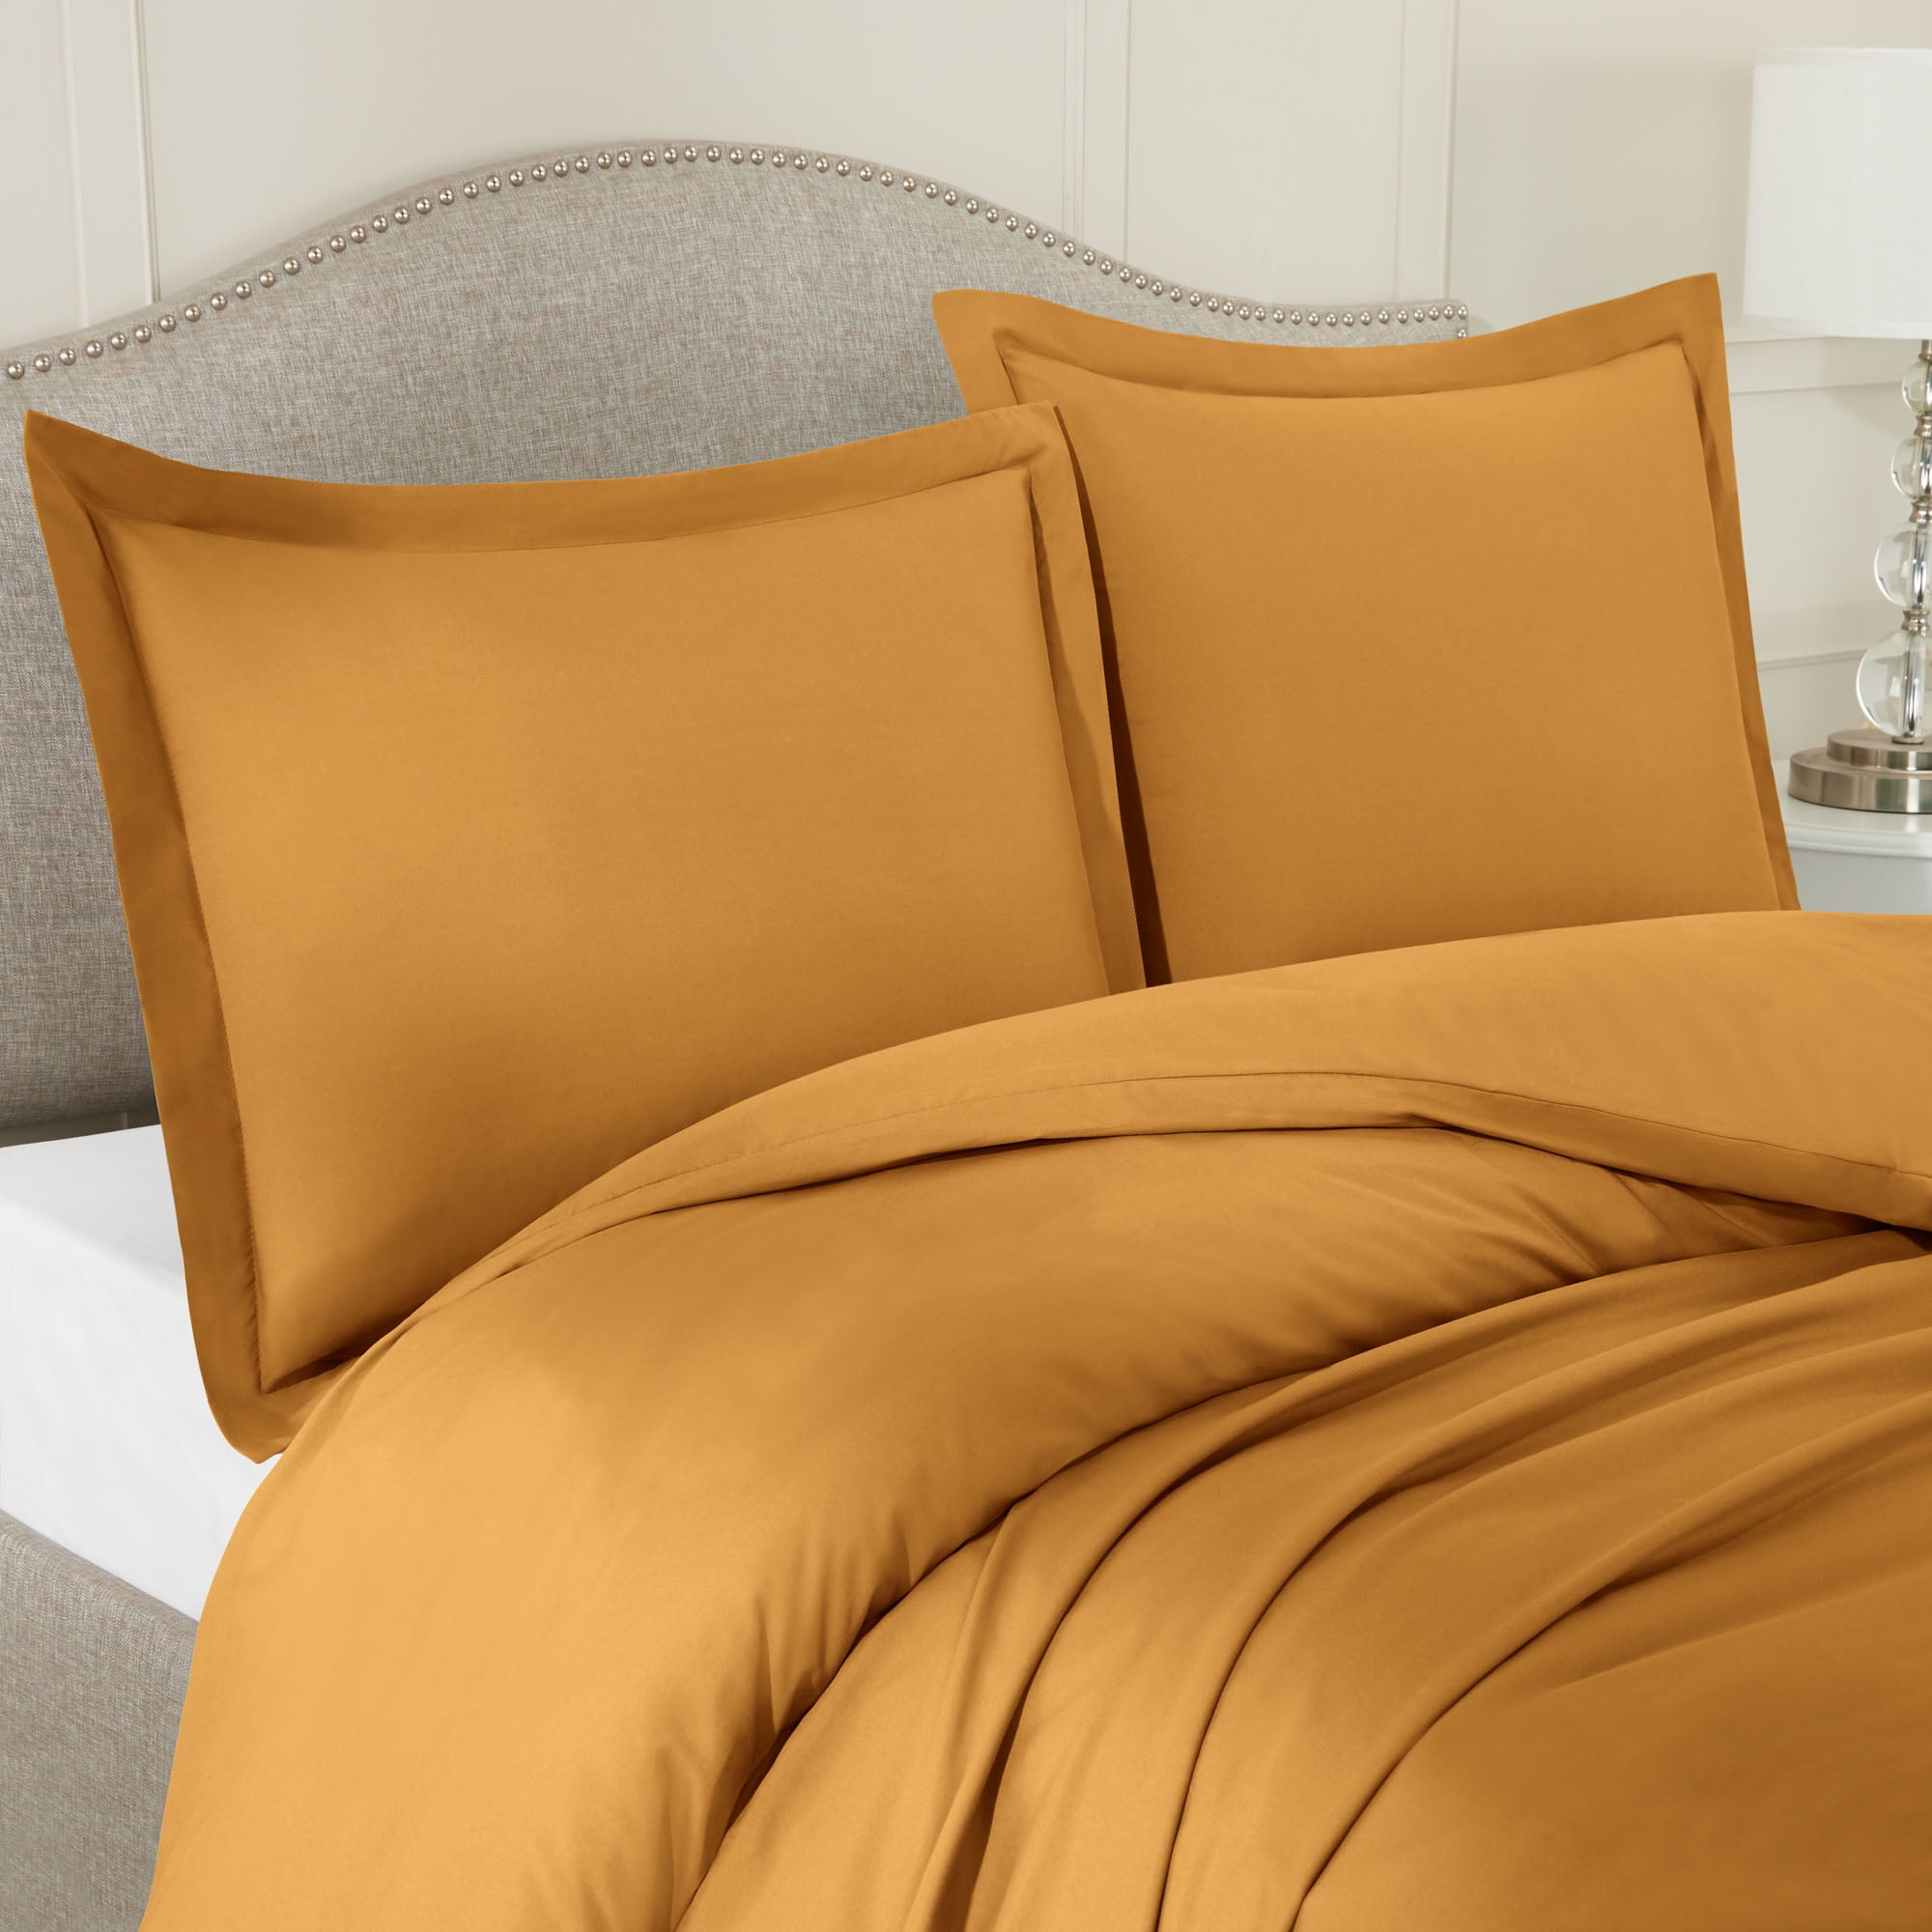 King Microfiber Duvet Set Comforter Cover and 2 Pillow Shams Nestl Bedding Comforter and Duvet Set Apricot Buff Orange Down Alternative Comforter 